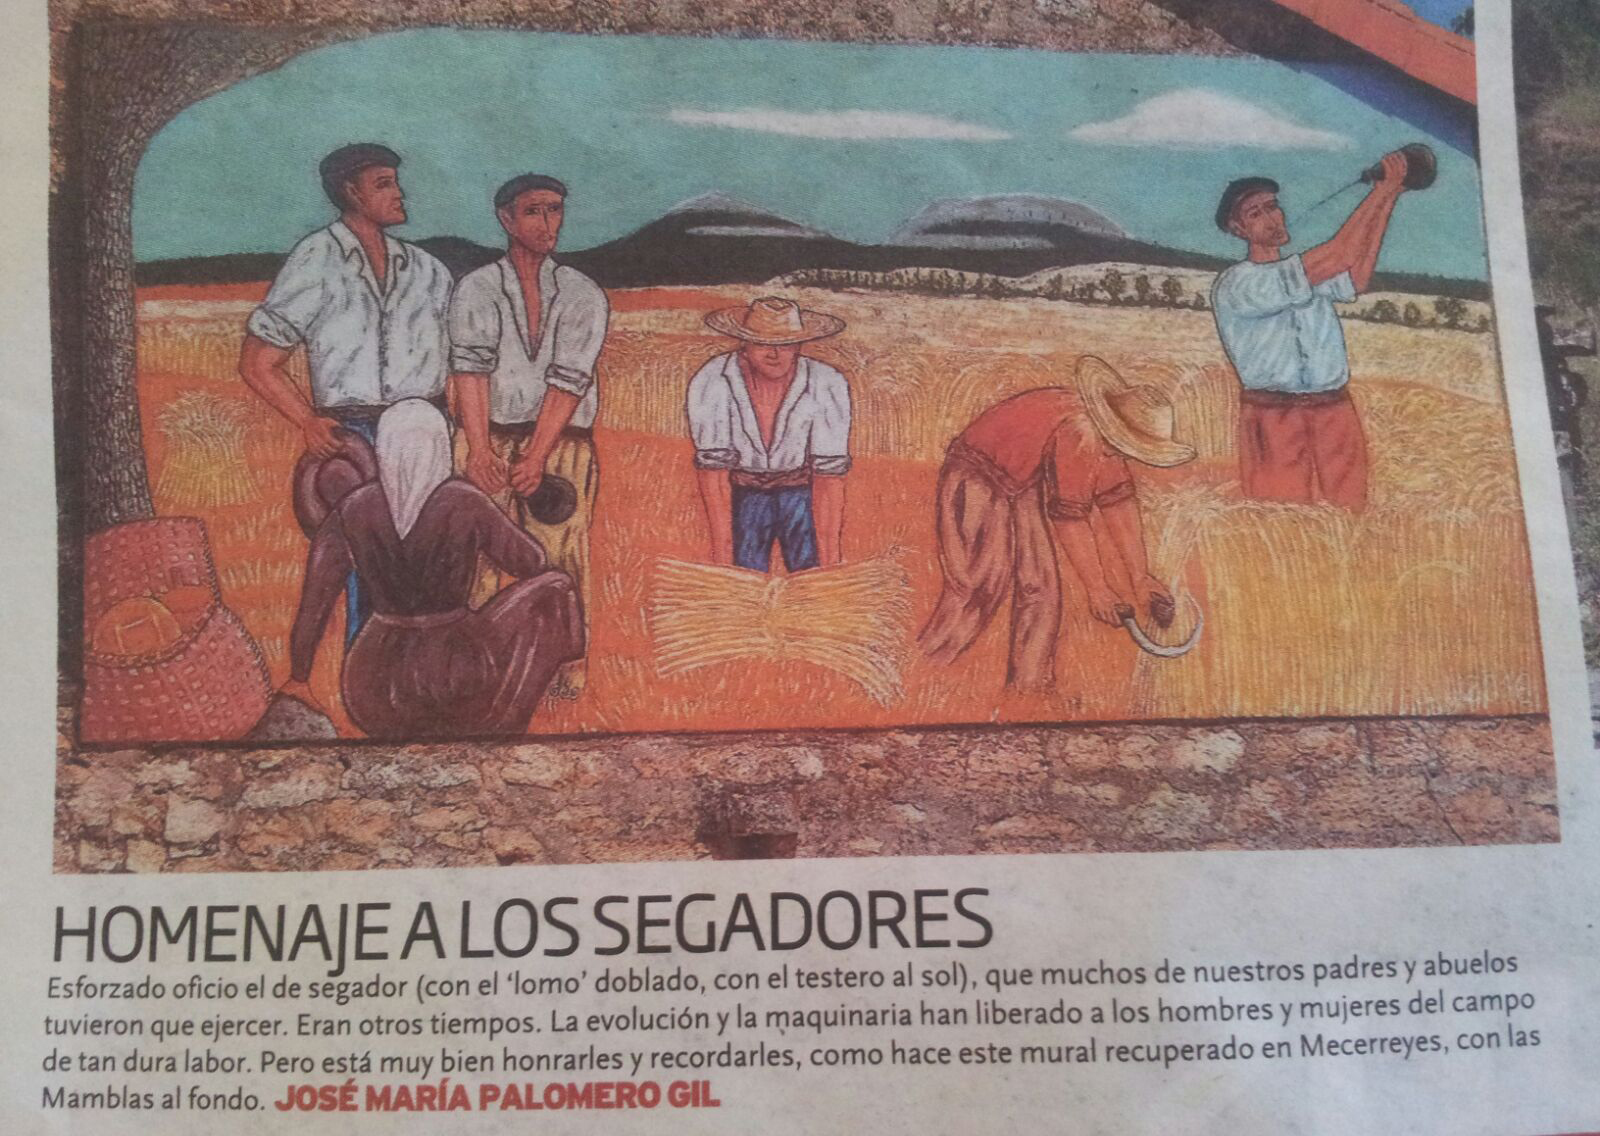 Homenaje a los Segadores, Diario de Burgos sept 2016